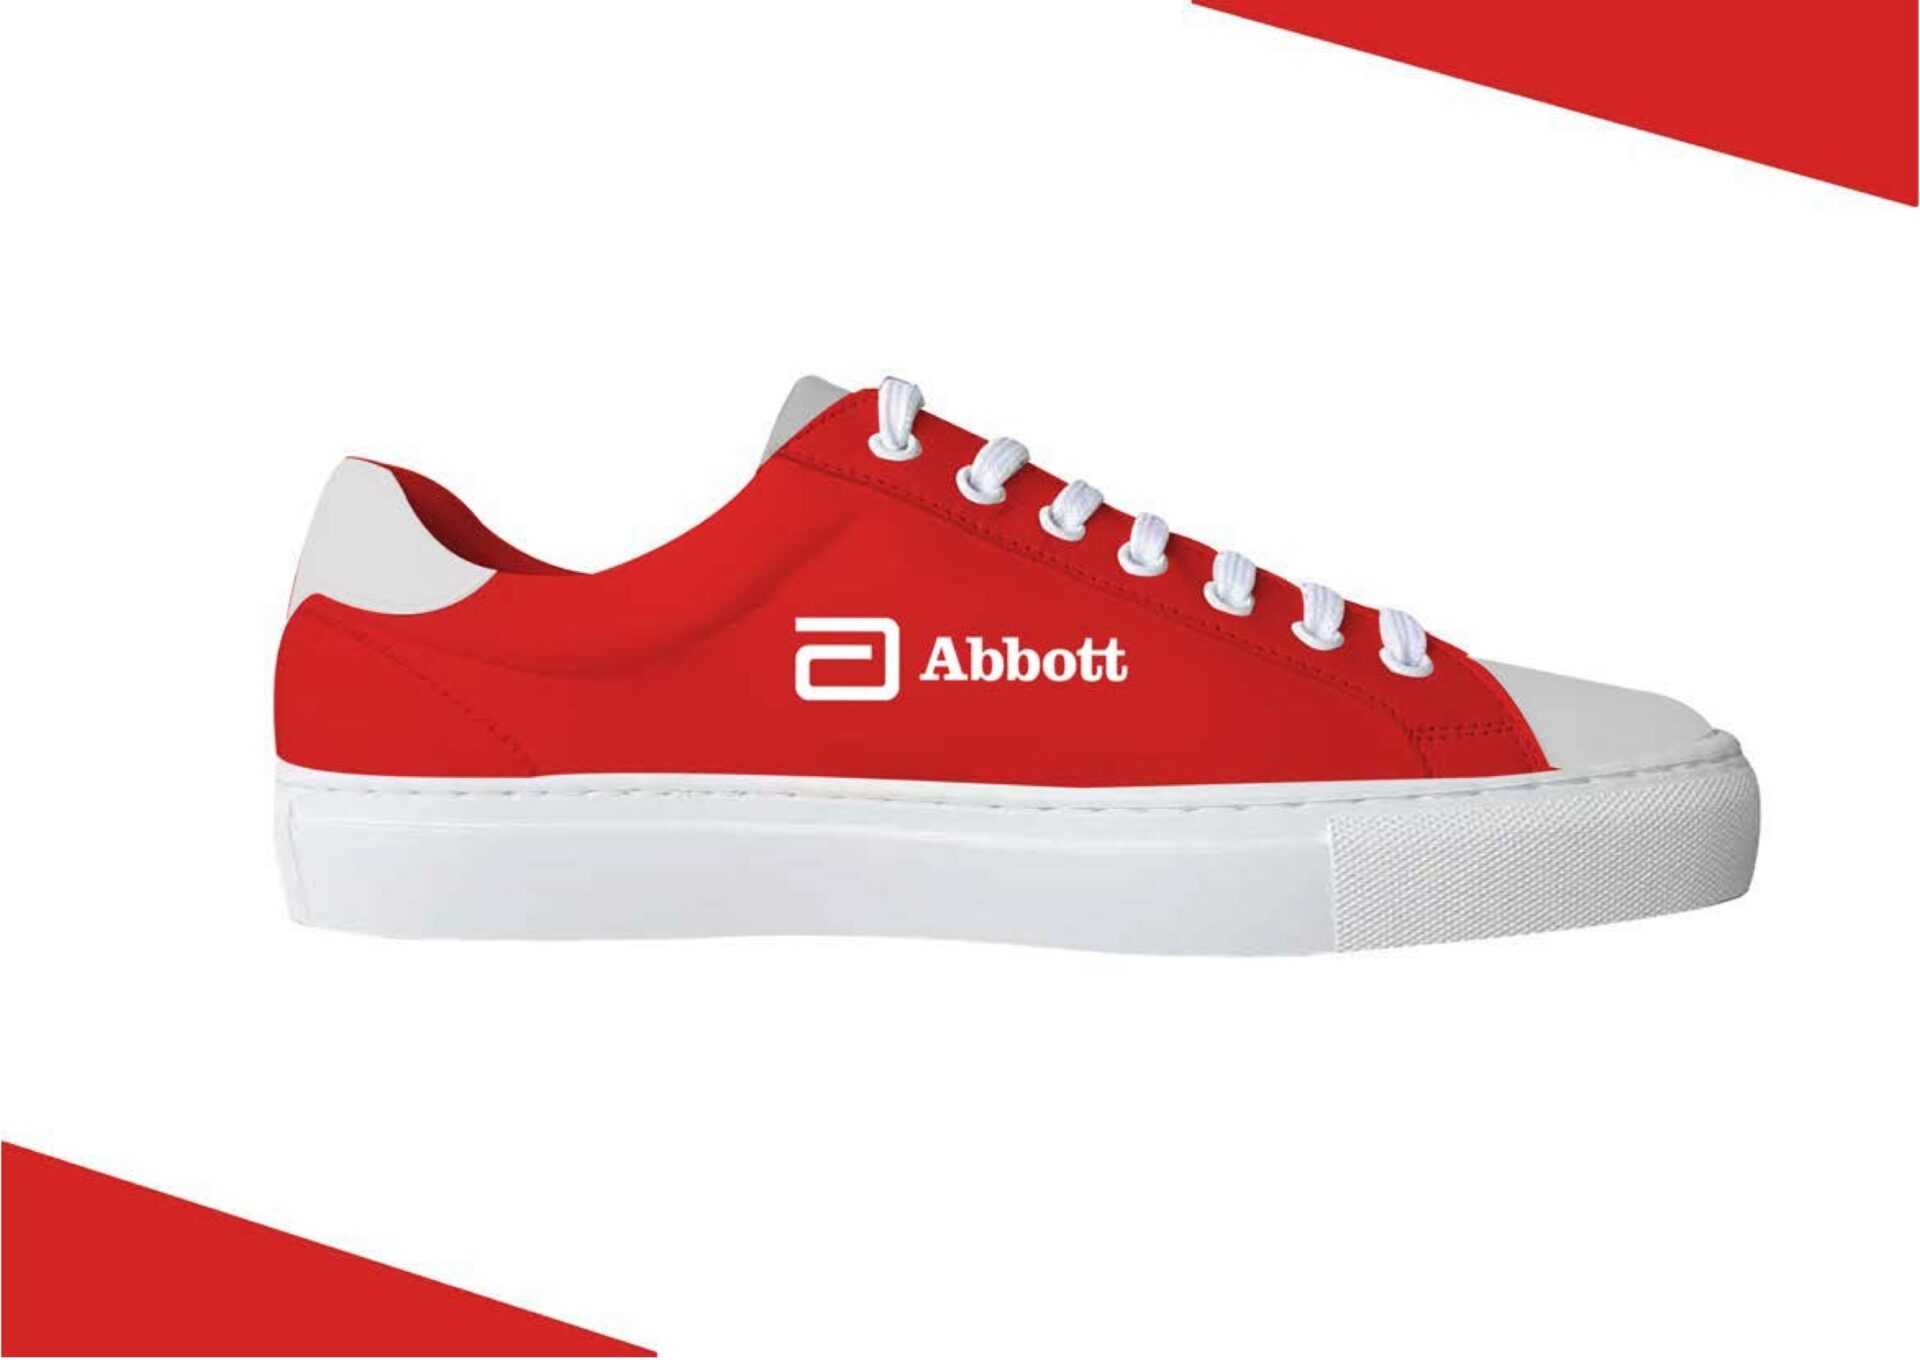 abbott sneakers logo imprint